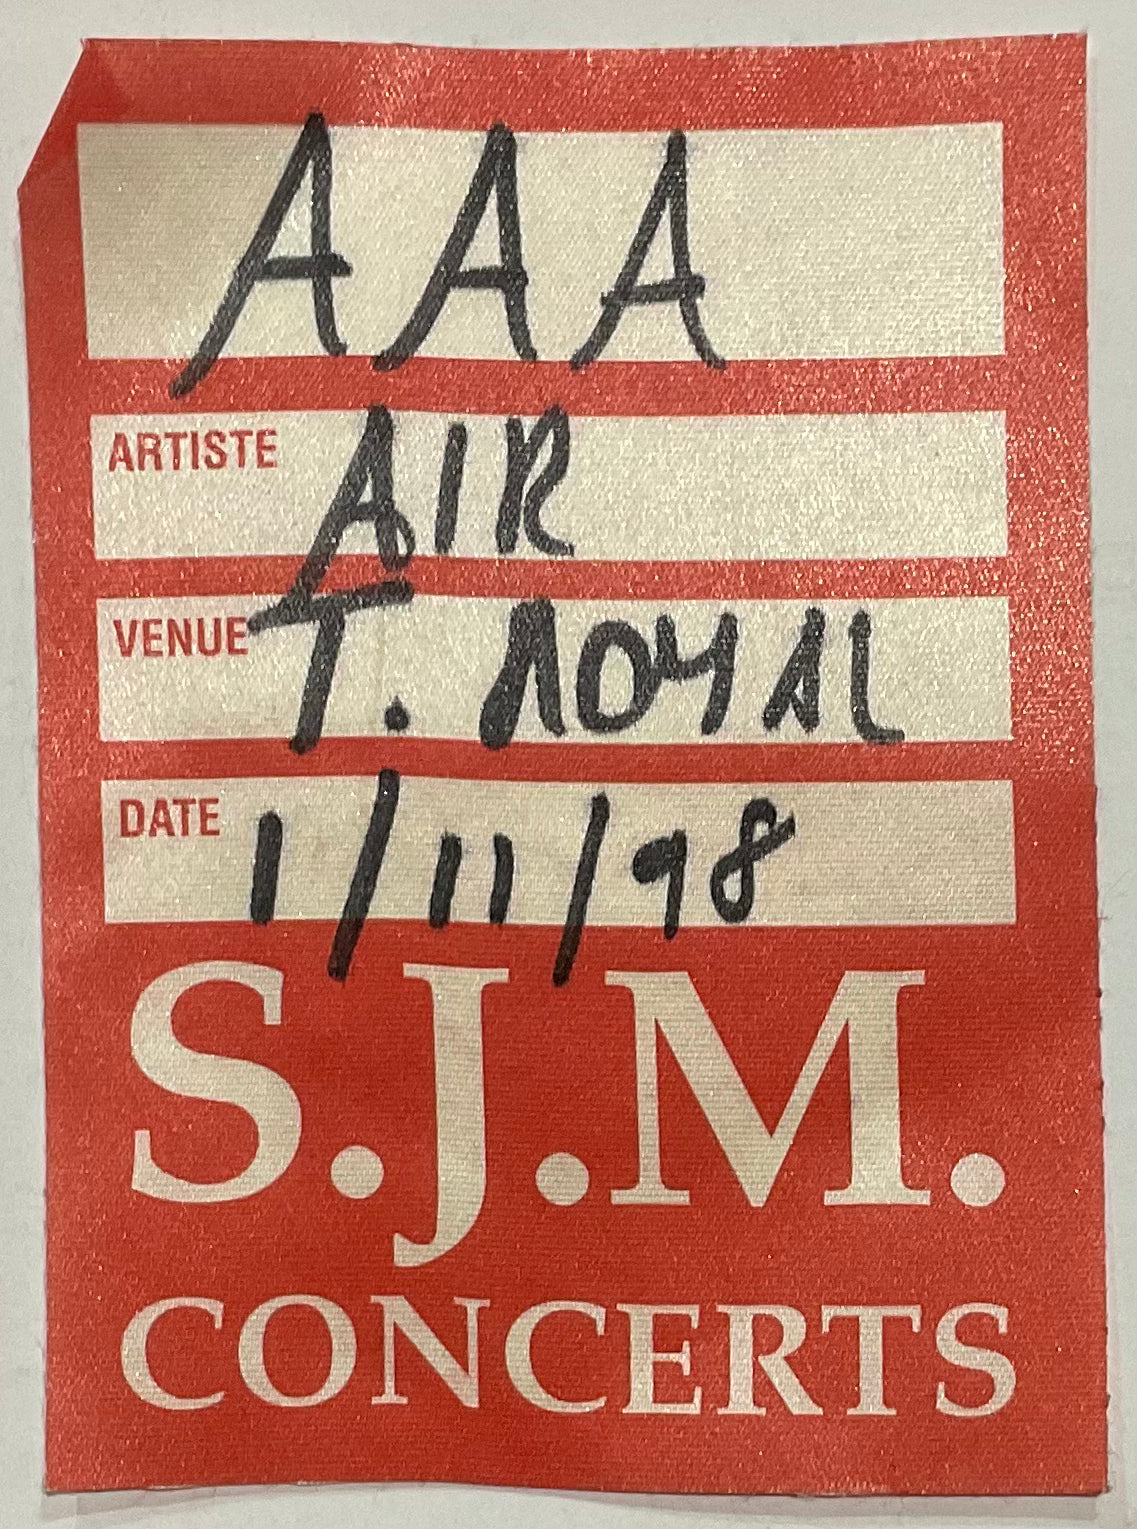 Air Original Used Concert Backstage Pass Ticket Theatre Royal Drury Lane London 1st Nov 1998